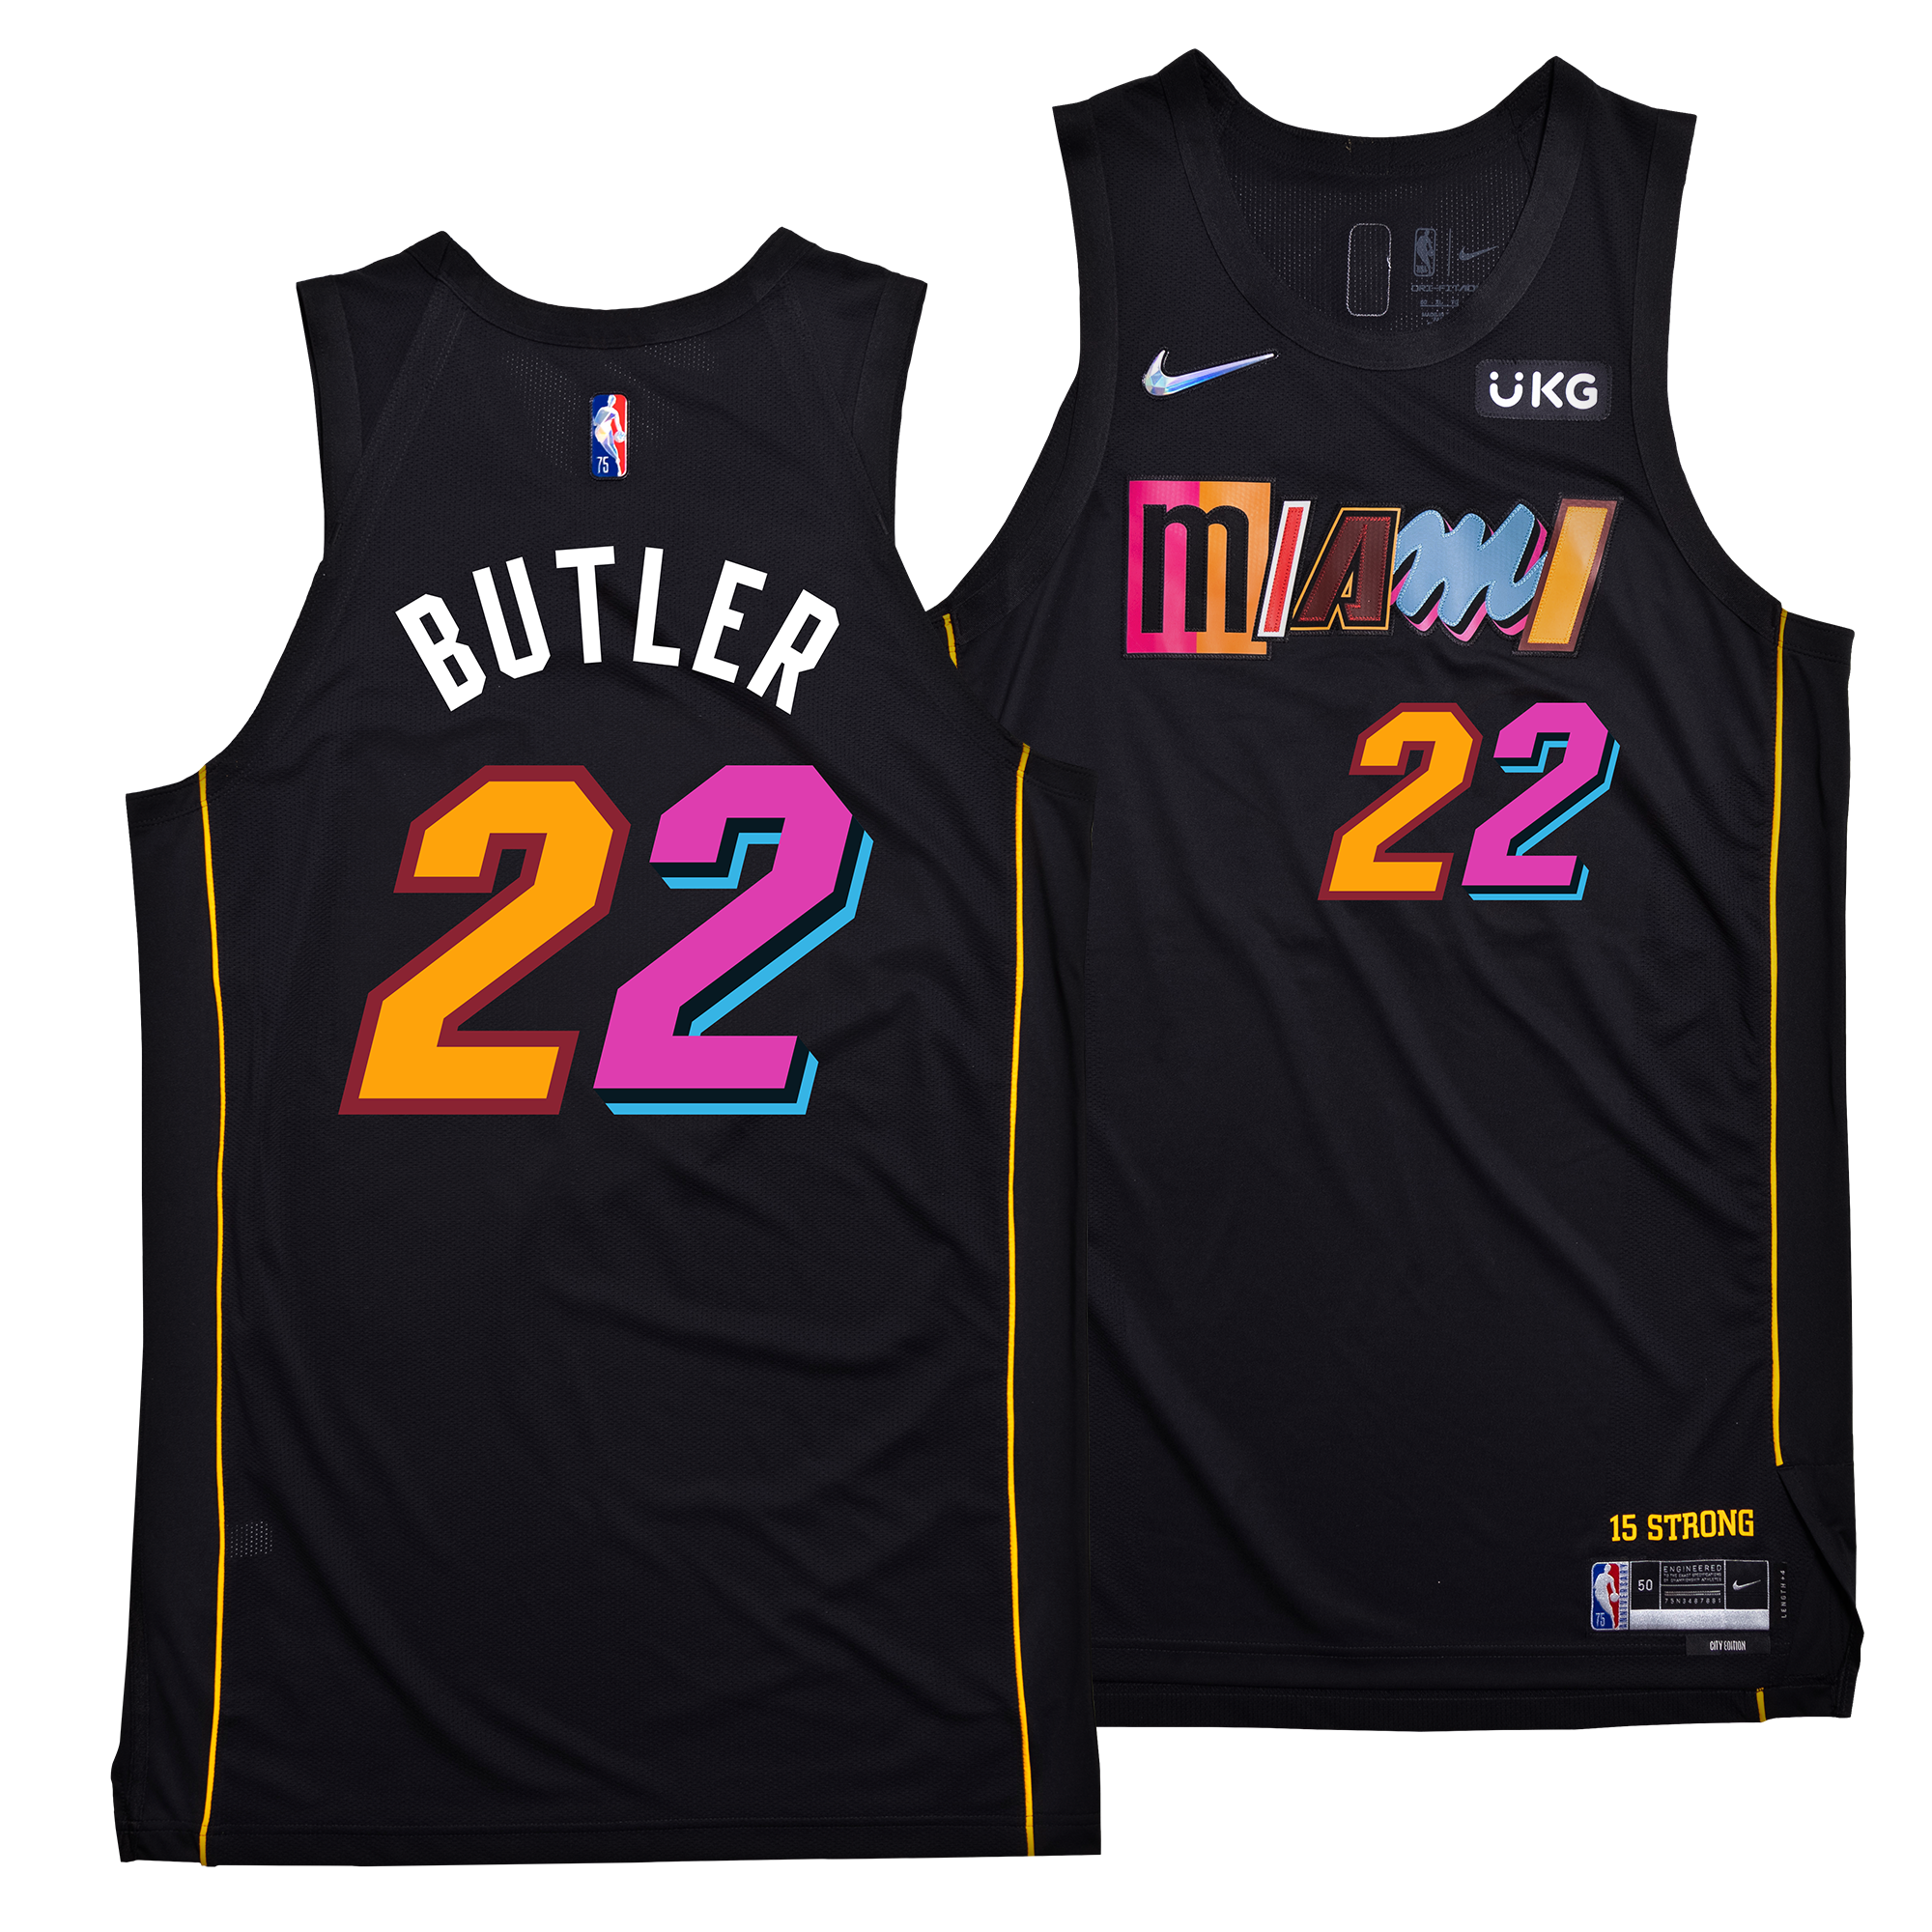 New Jimmy Butler Miami Heat Nike City Edition Swingman Jersey Men's XL  2020 NBA